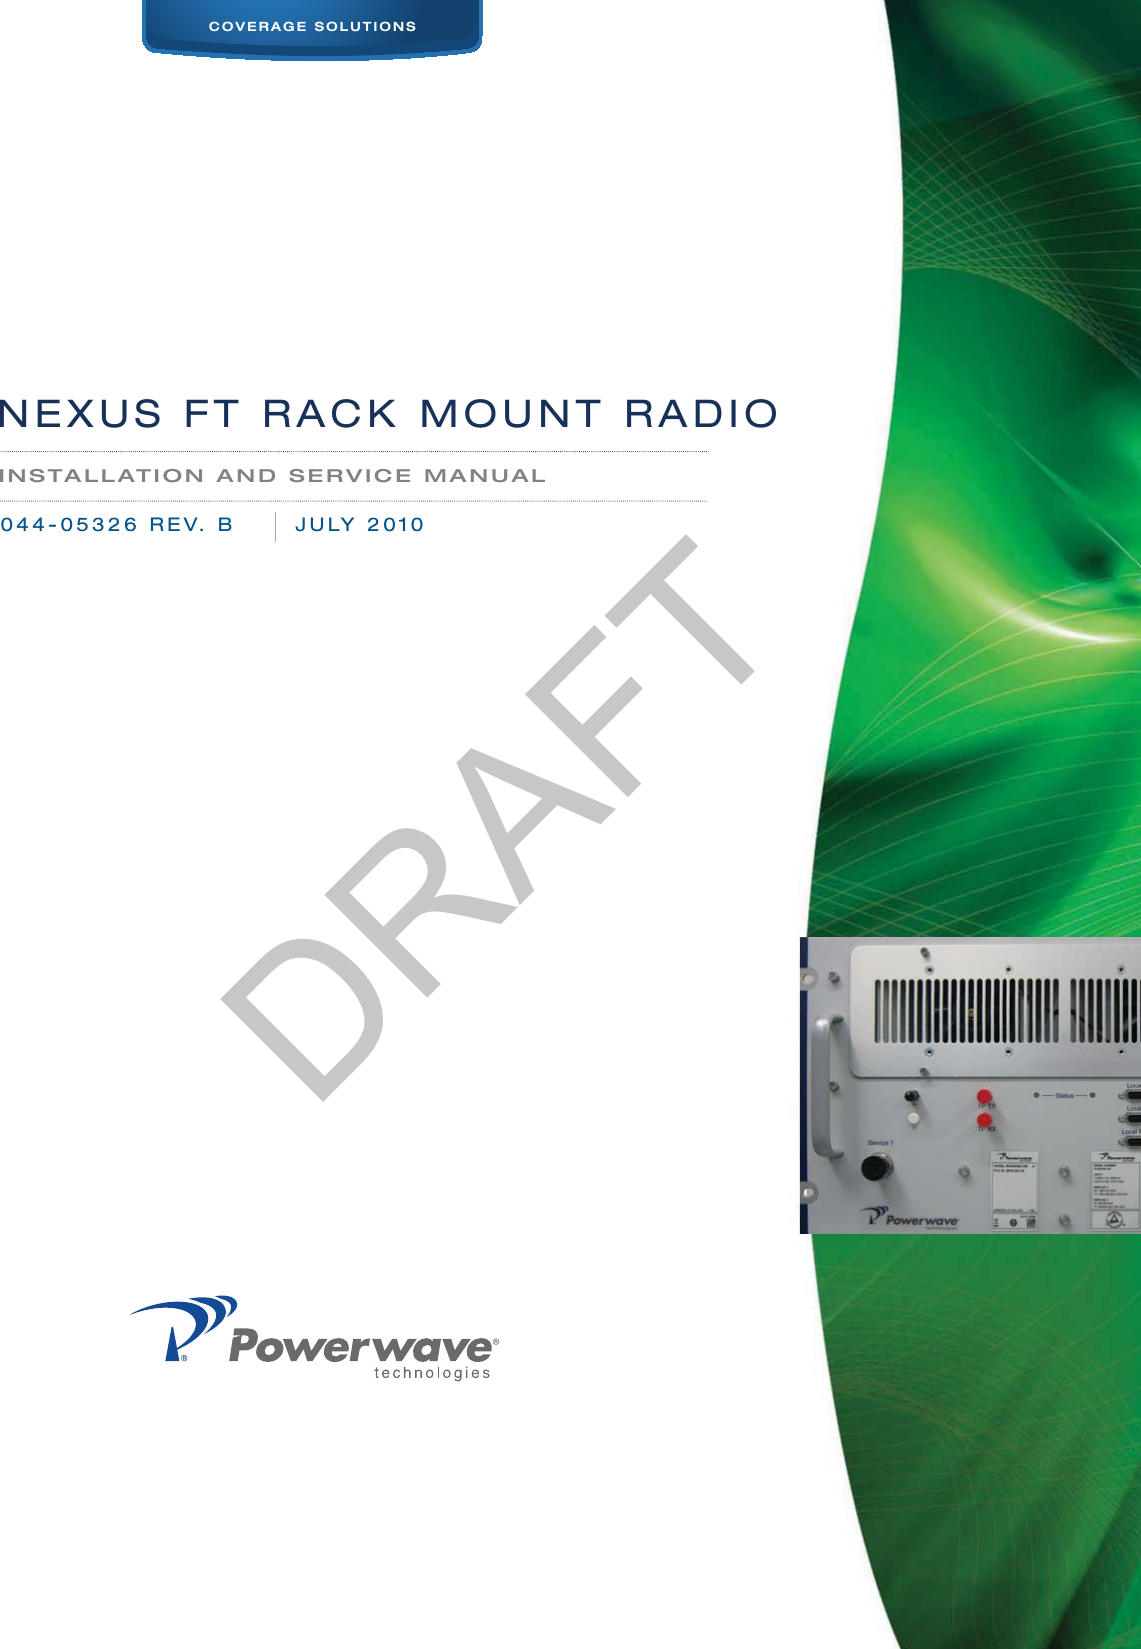 COVERAGE SOLUTIONSINSTALLATION AND SERVICE MANUAL044-05326 REV. B   JULY 2010 NEXUS FT RACK MOUNT RADIO      DRAFT